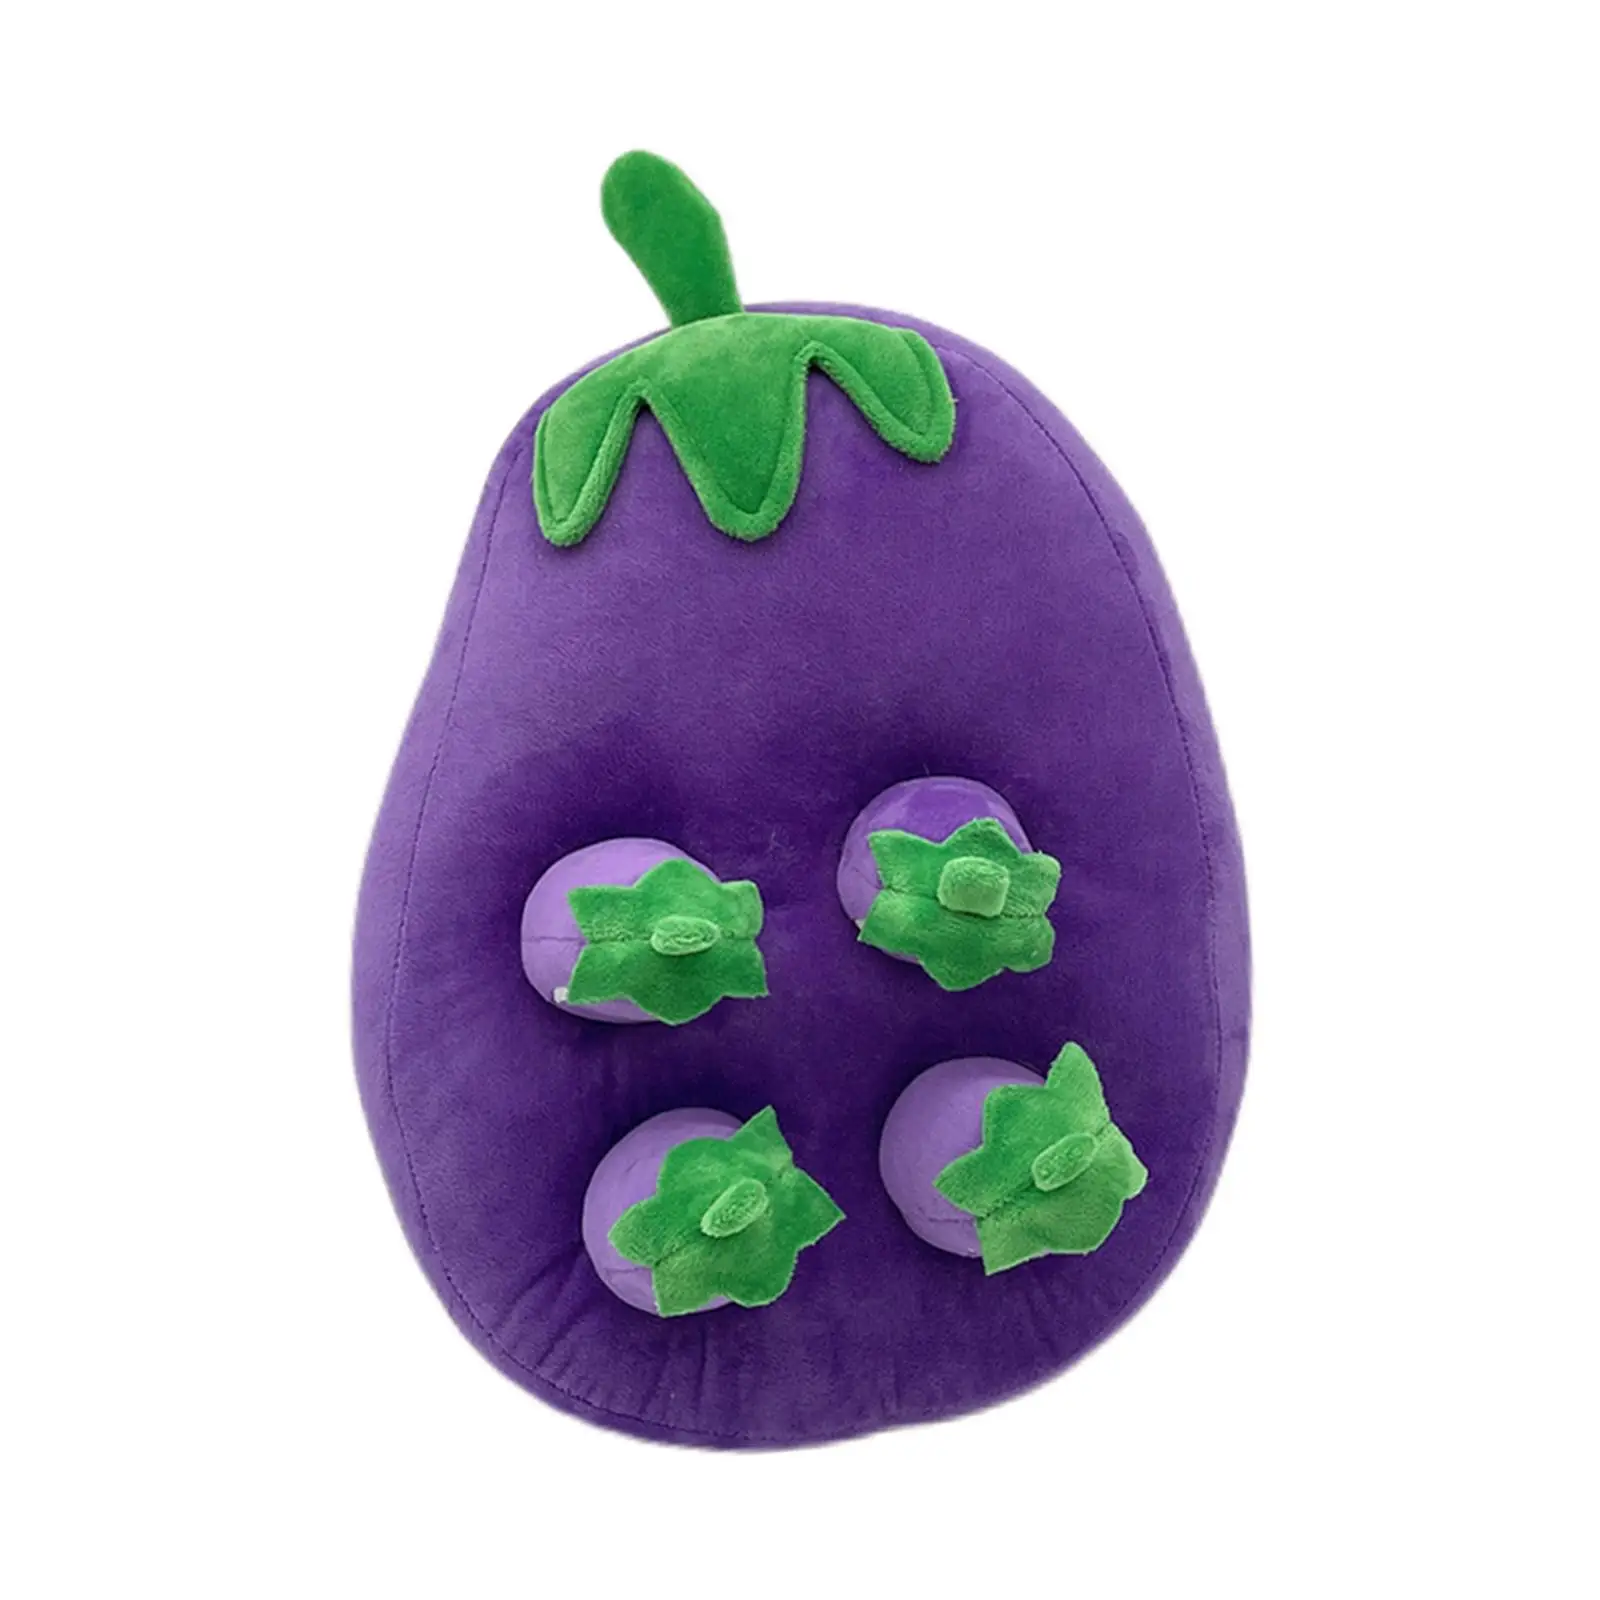 Turtle Eggplant Plushtoy Molars Toy Parent Child Interaction Education Stuffed Toy Vegetable Fruit Plush Toy for Baby Dog Pet